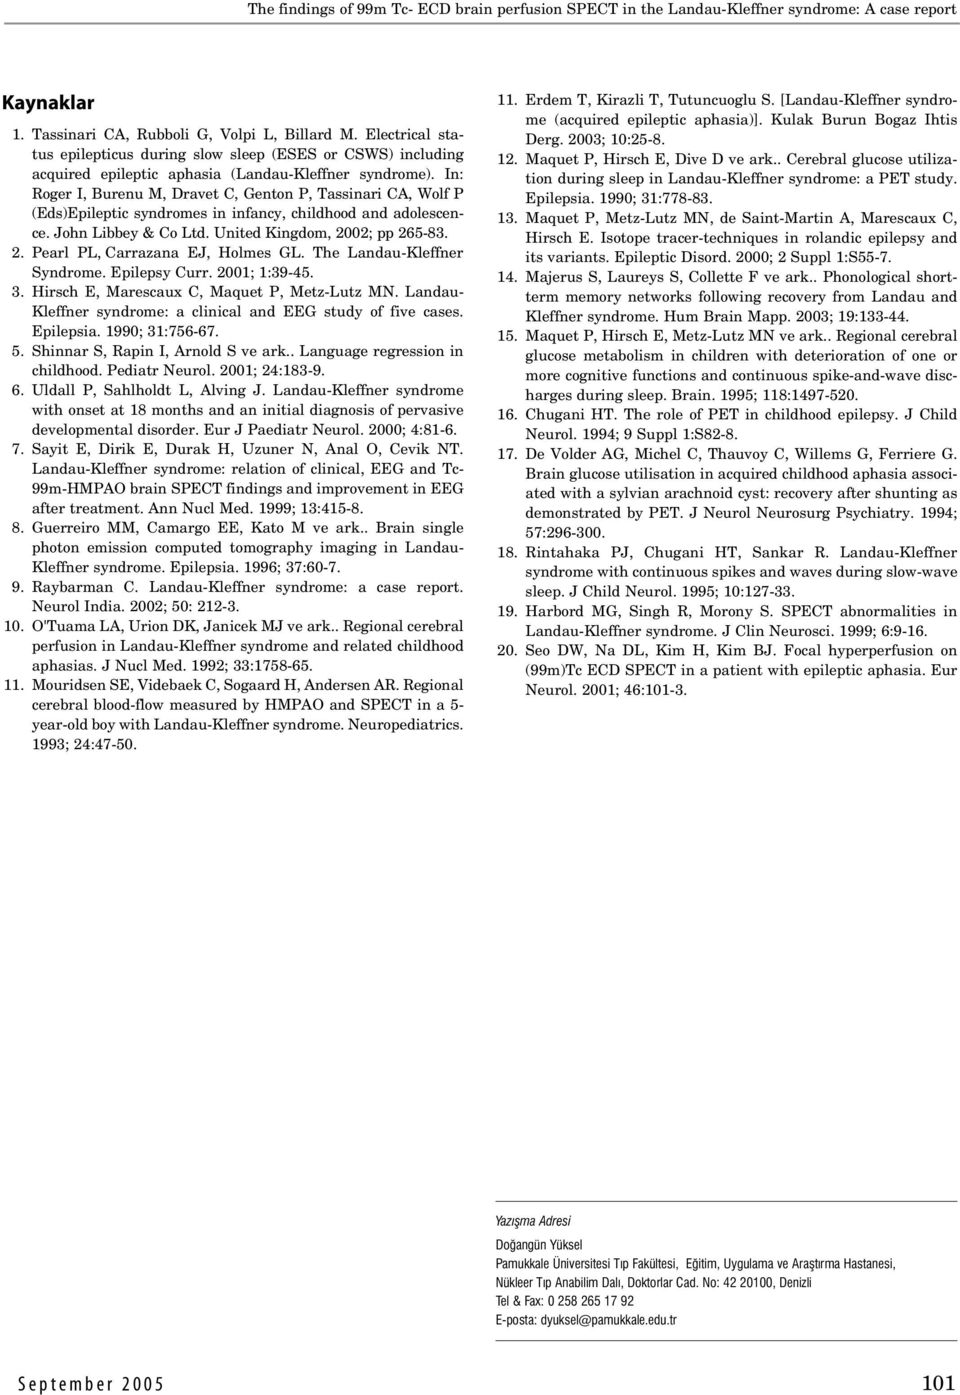 In: Roger I, Burenu M, Dravet C, Genton P, Tassinari CA, Wolf P (Eds)Epileptic syndromes in infancy, childhood and adolescence. John Libbey & Co Ltd. United Kingdom, 20